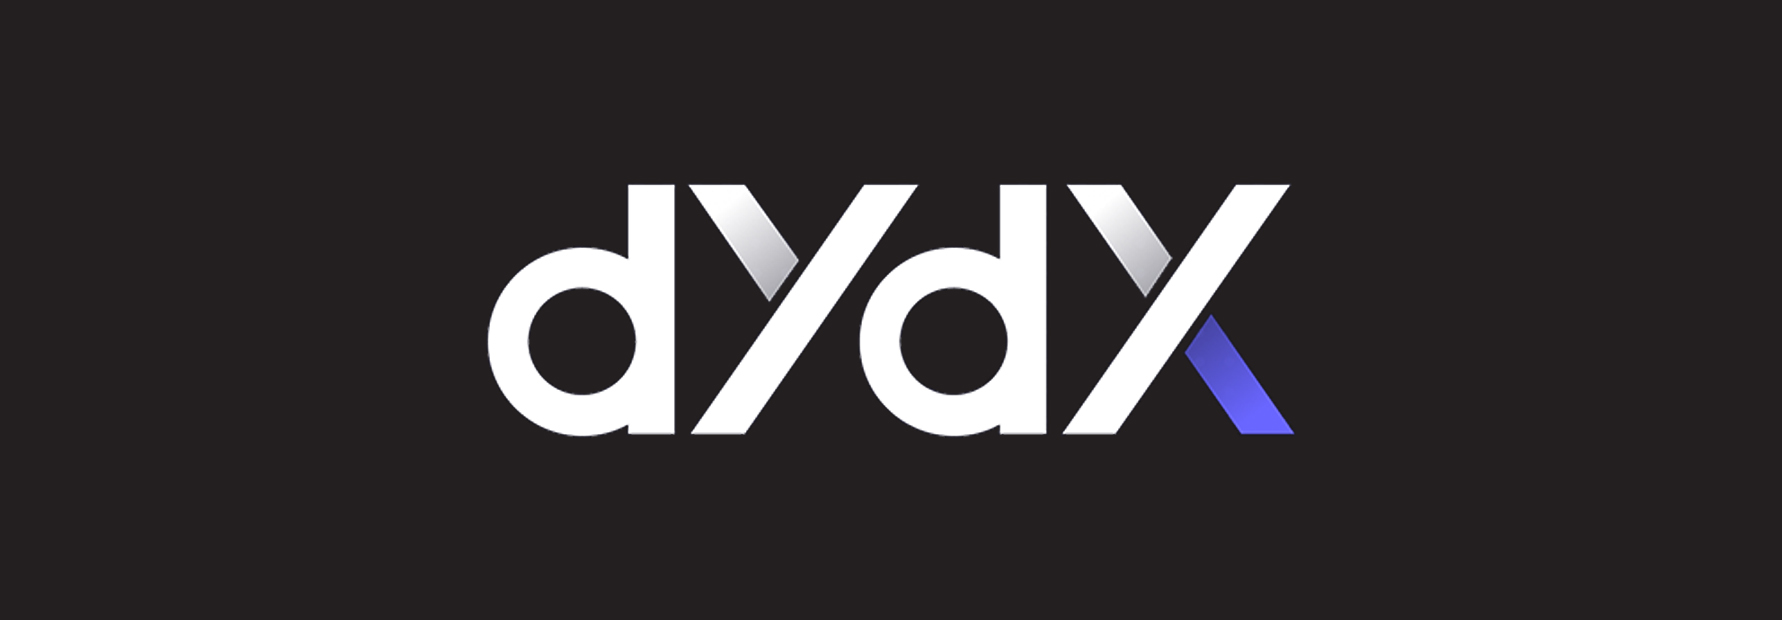 dydx-logo.jpg